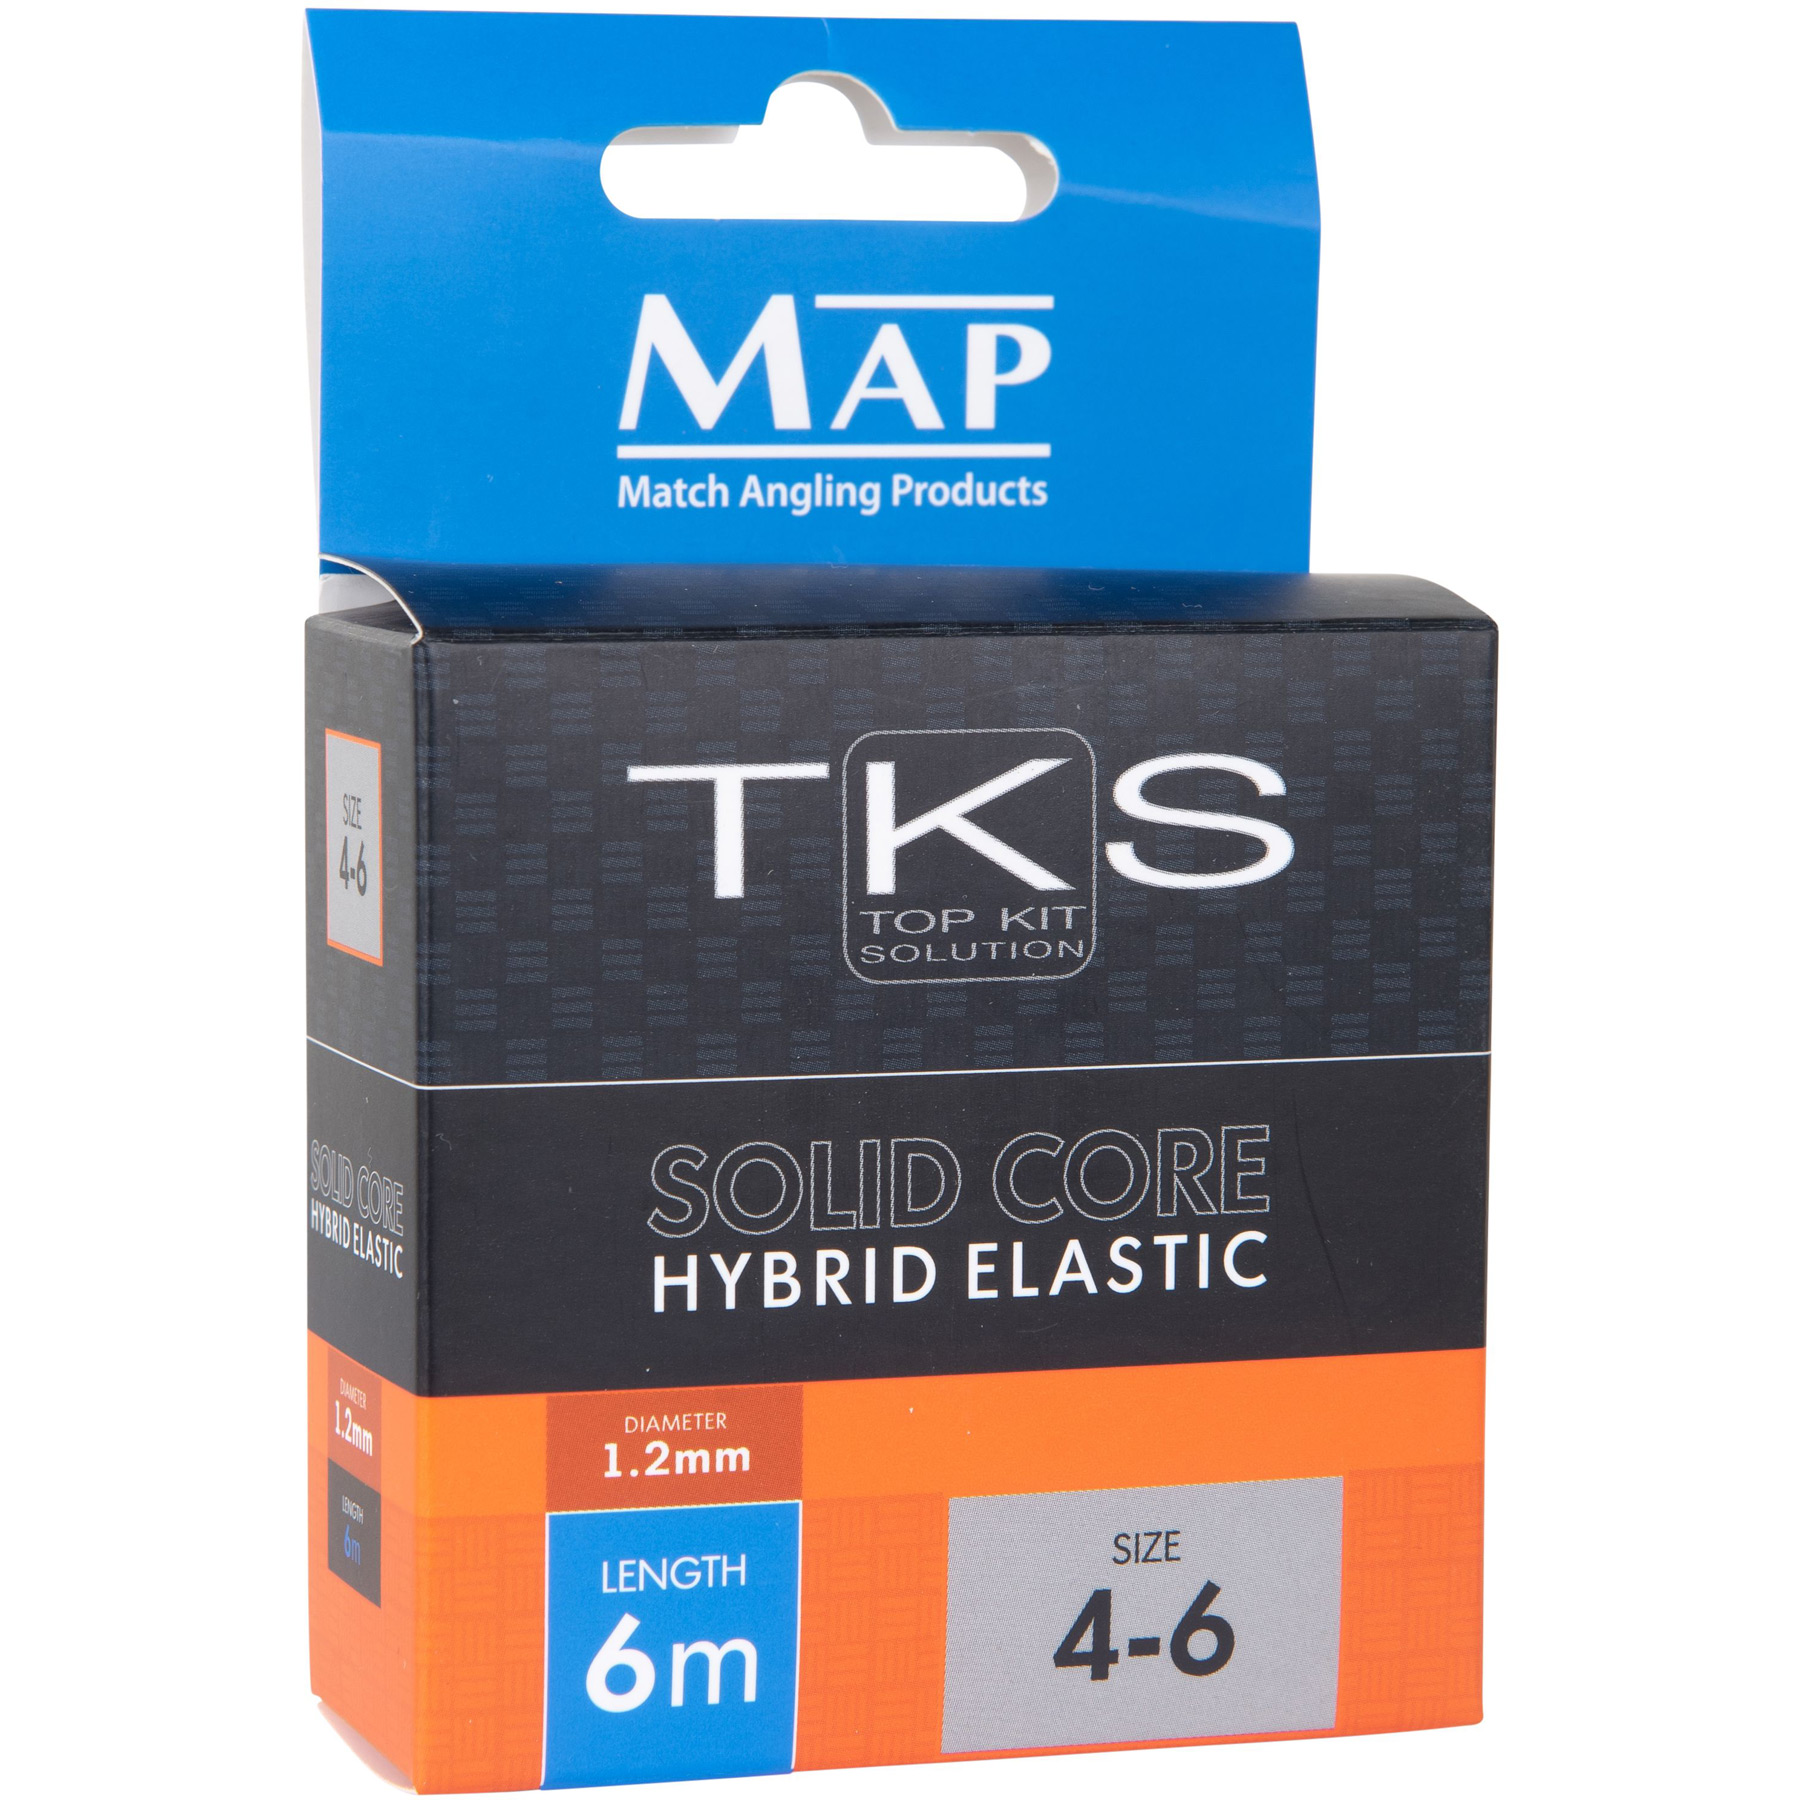 MAP TKS 4-6 Hybrid Pole Elastic 1.2mm 6mtr